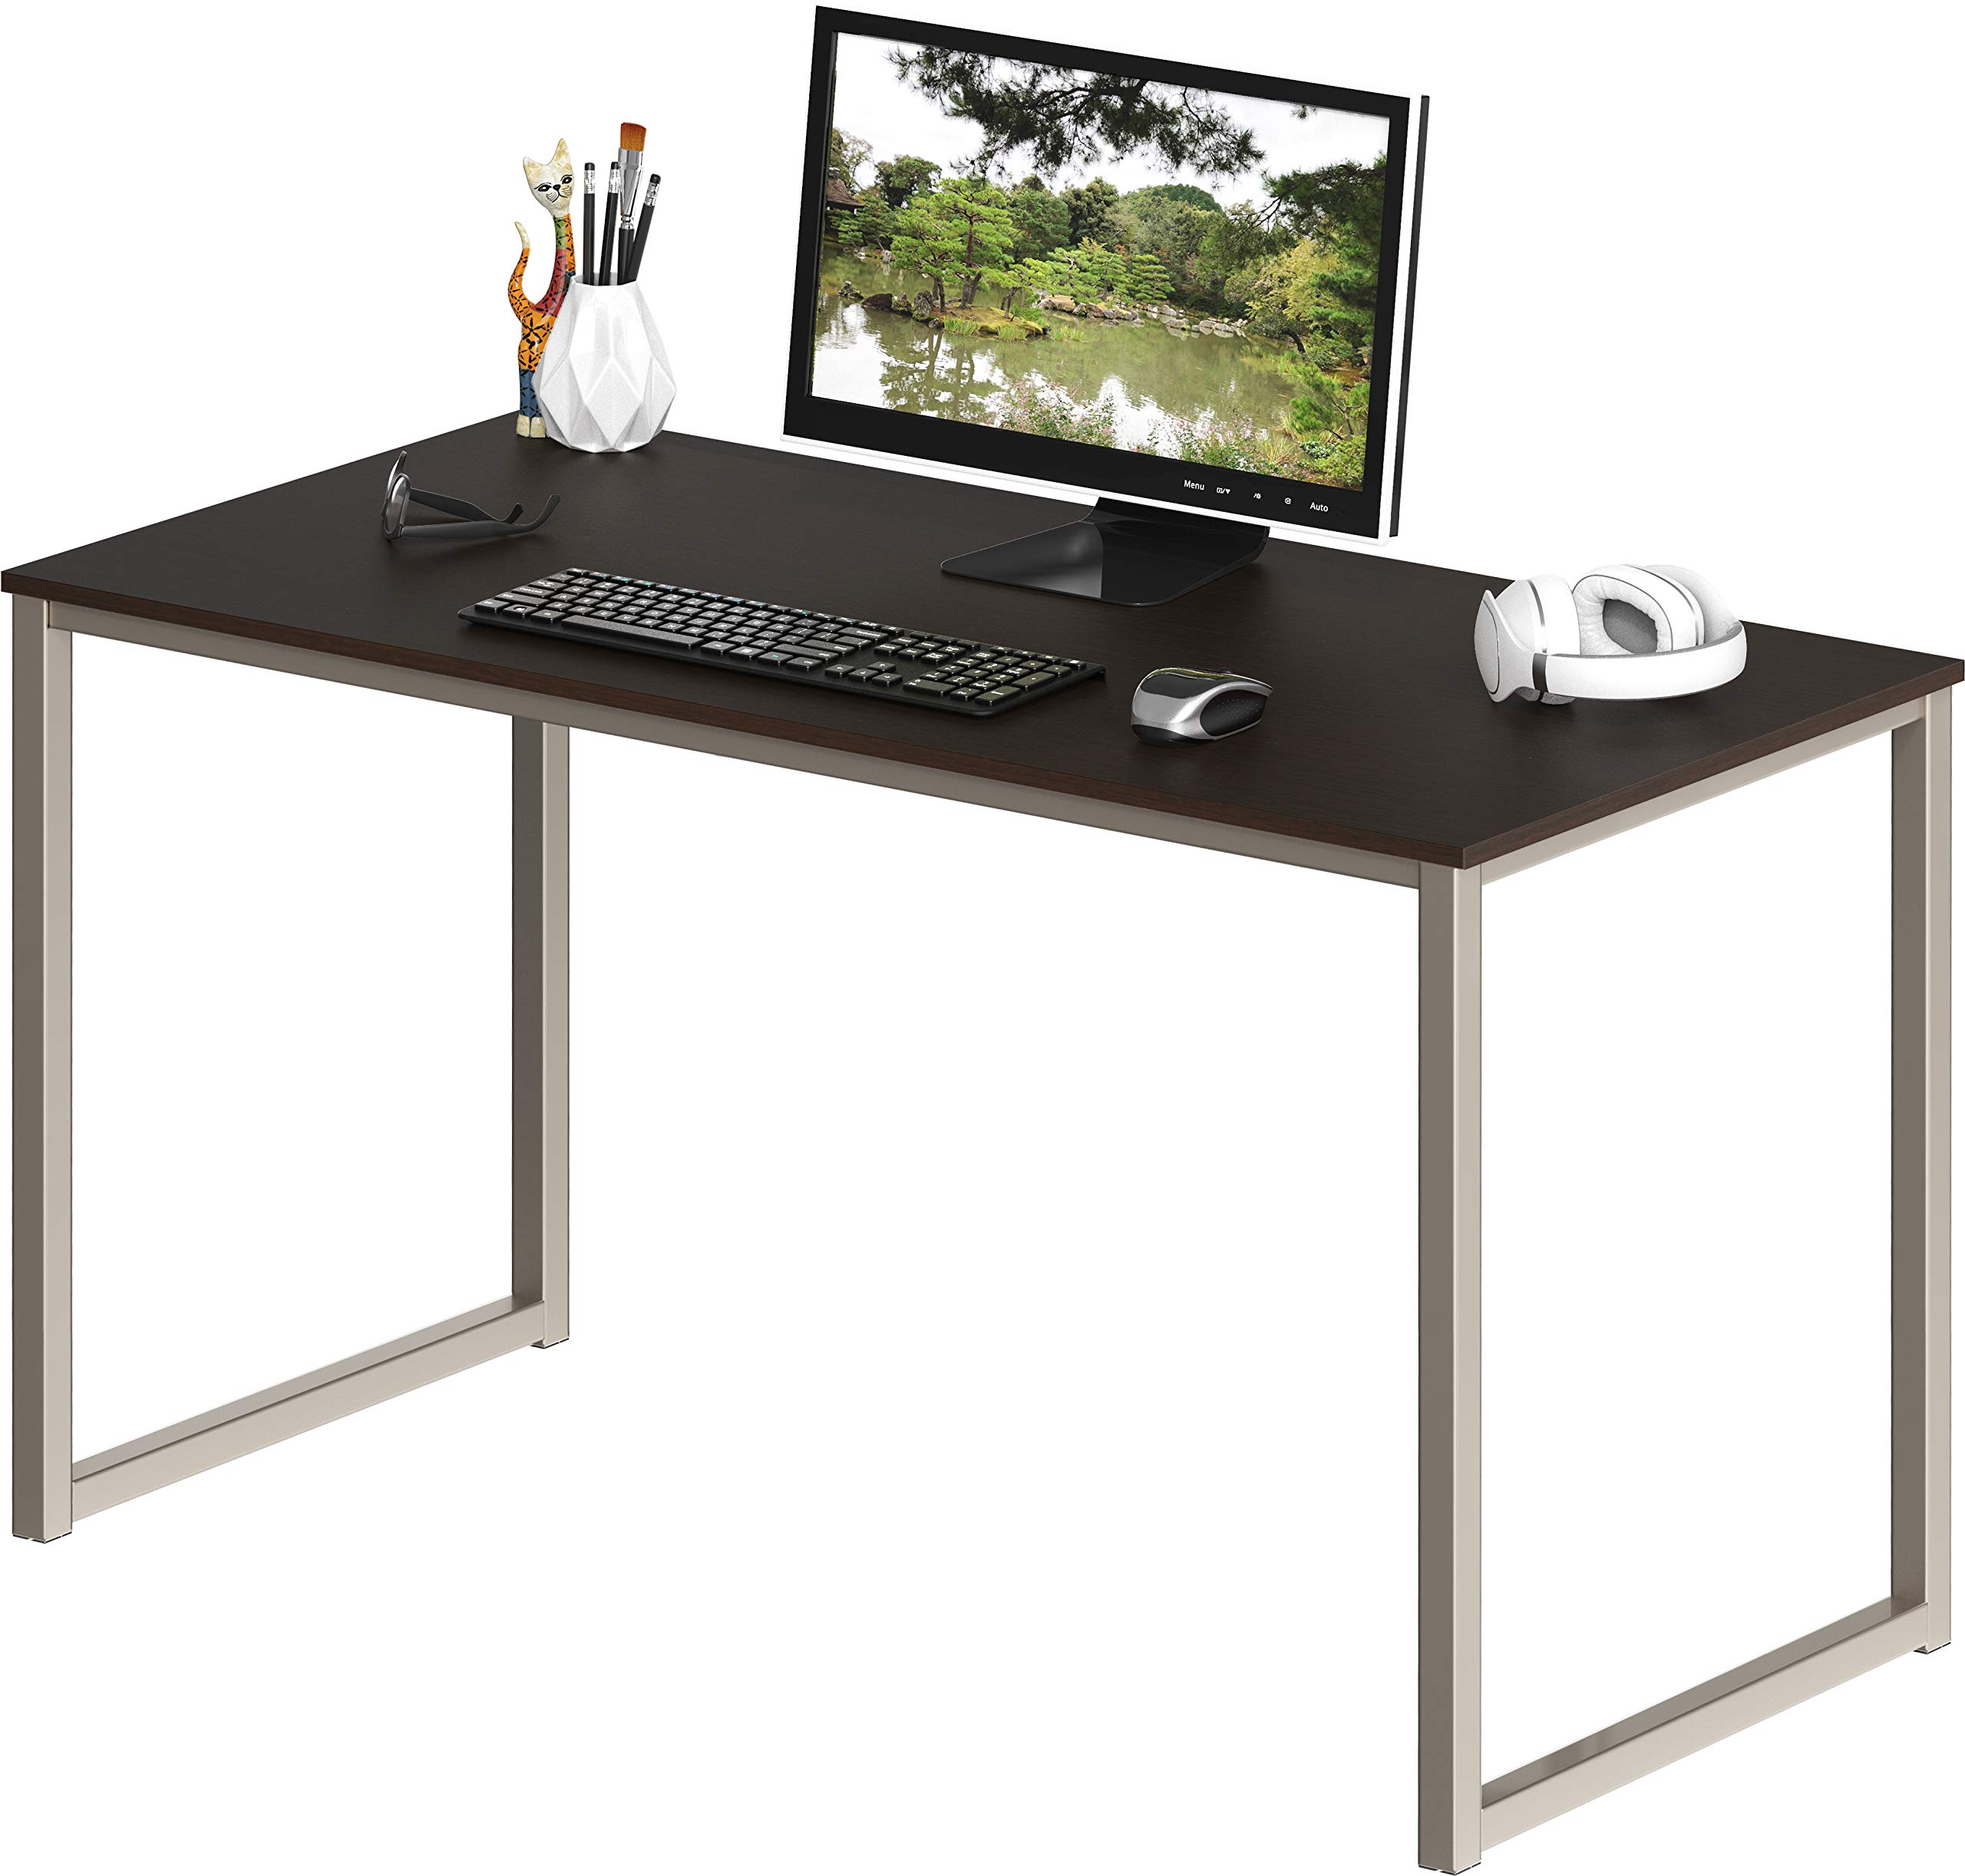 Mission 40 inches office desk, Espresso - image 1 of 5